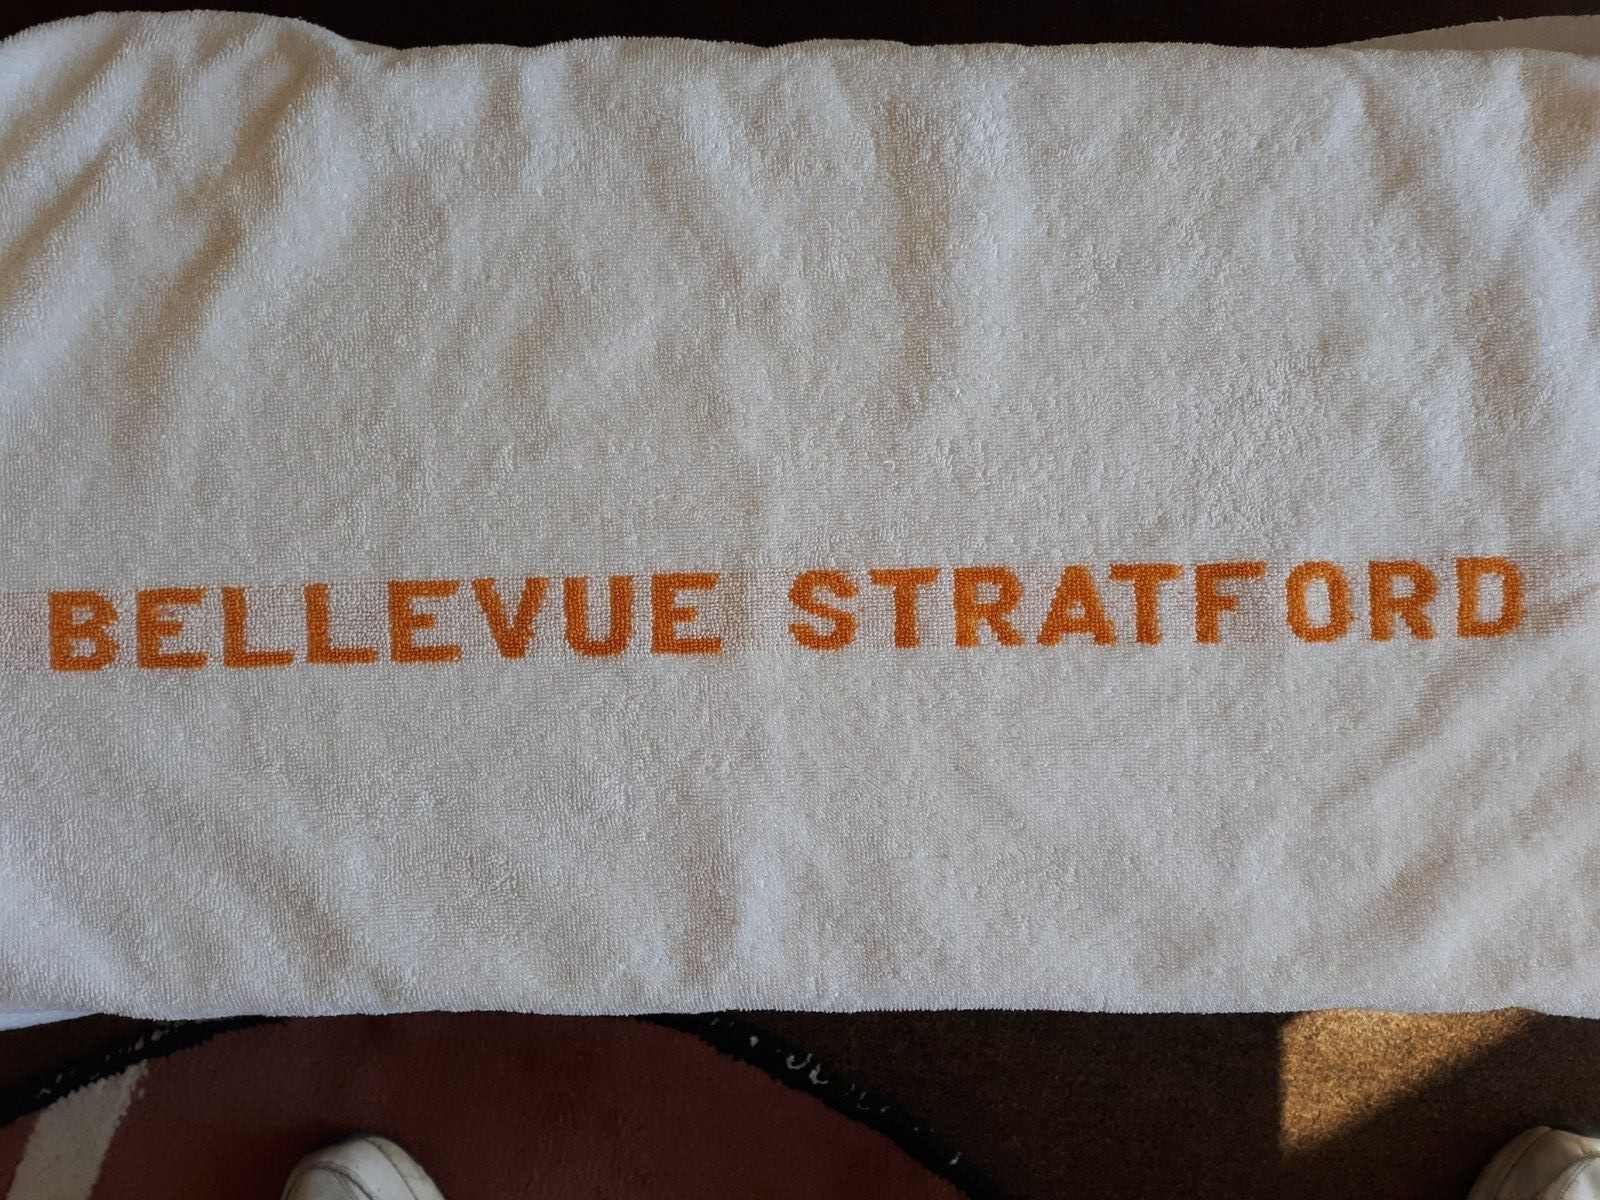 The Bellevue - Stratford Hotel Philadelphia Pennsylvania Vintage TOWEL 50 x 26